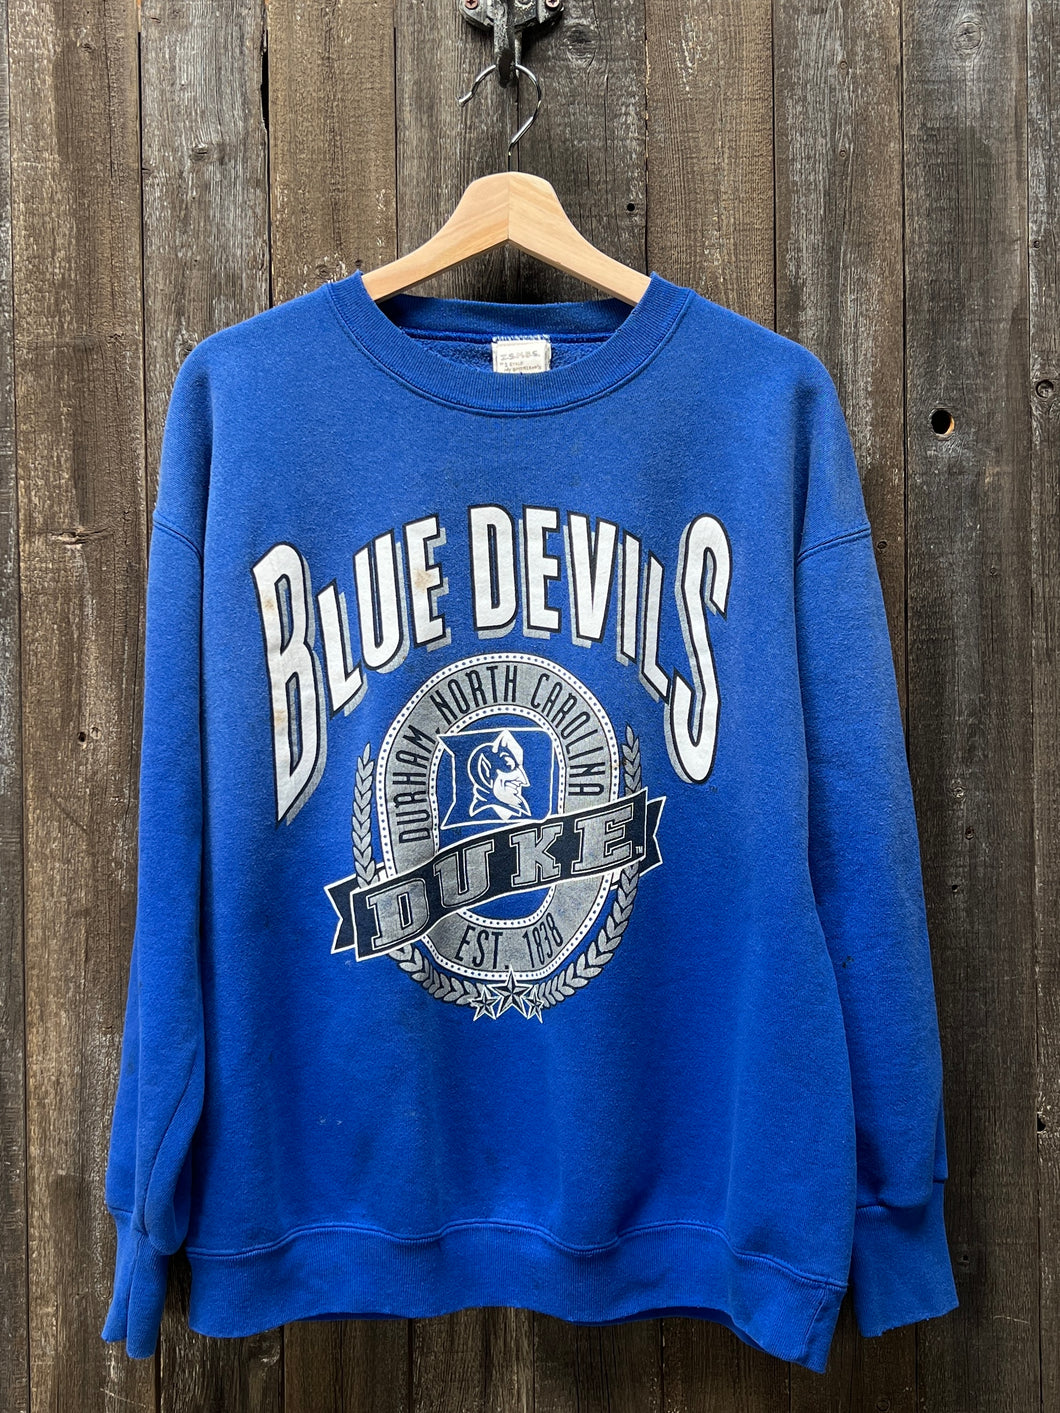 Blue Devils Duke Sweatshirt -L/XL-Customize Your Embroidery Wording